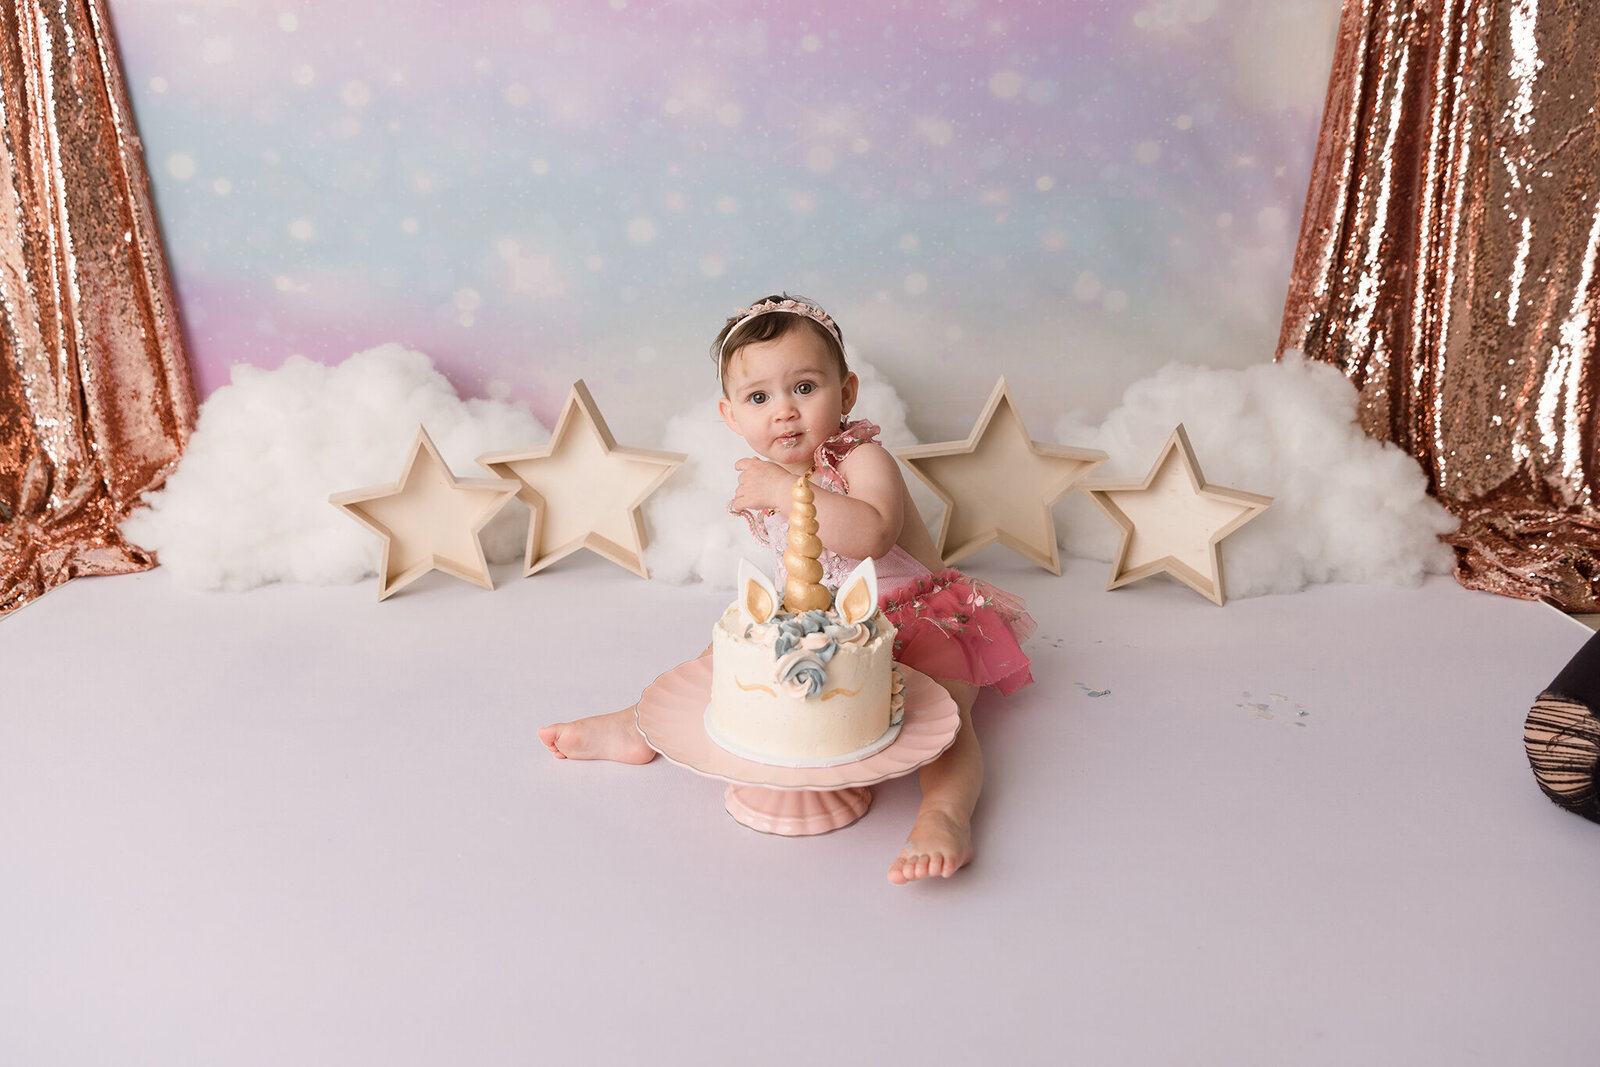 Newborn Bliss: Aurora Joy Photography Captures Precious Moments